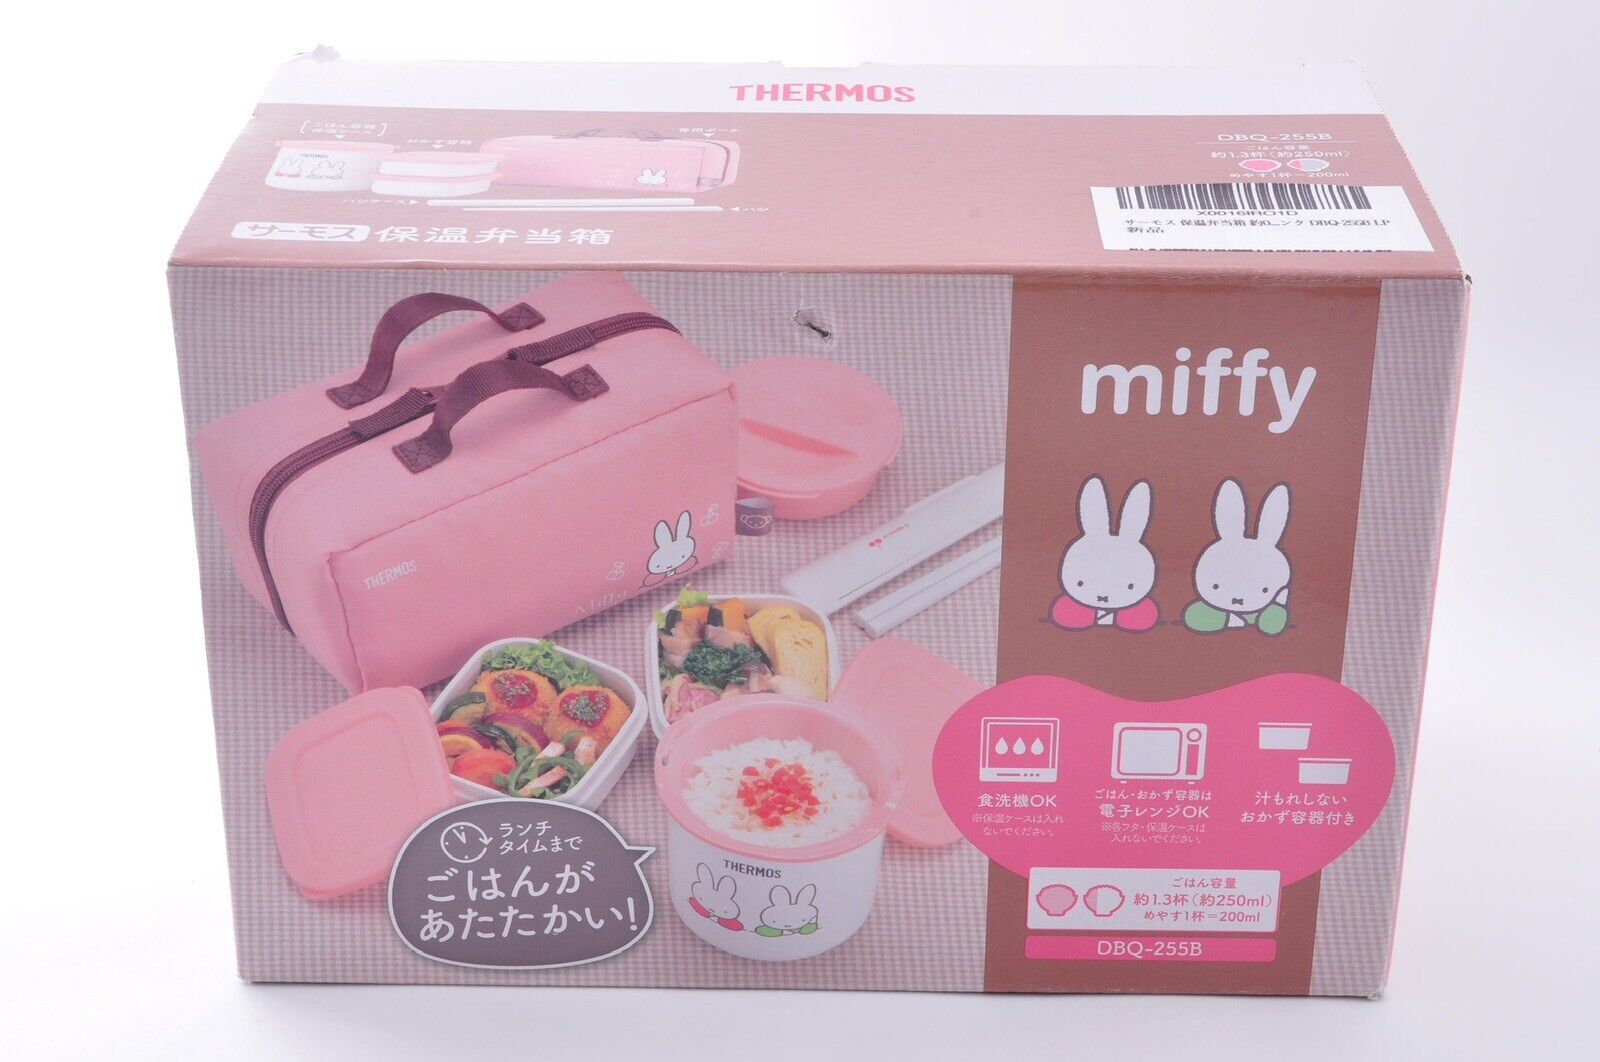 Miffy THERMOS Lunch Box set Chopsticks & Pouch Pink DBQ-255B NEW Japan limited